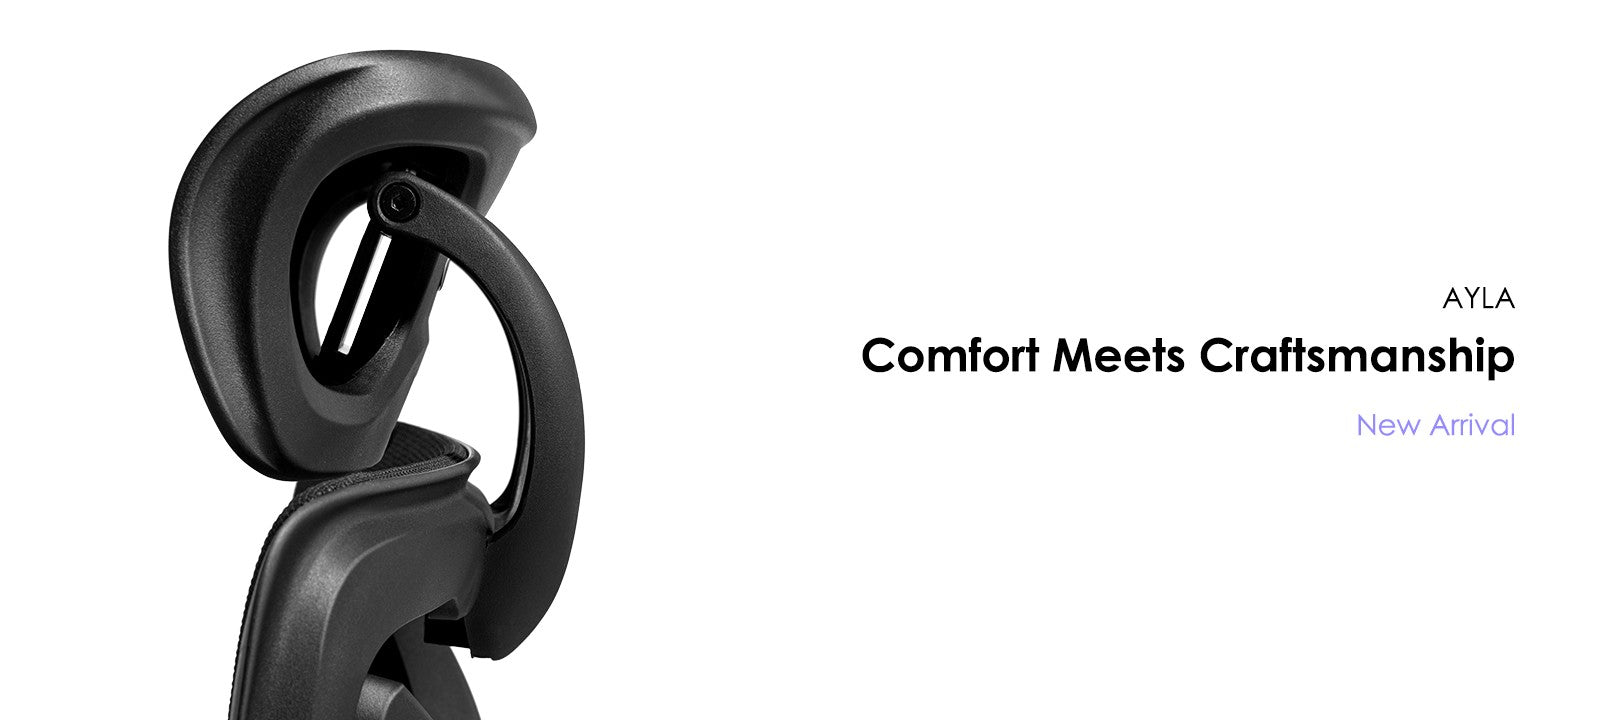 Close-up view of Ayla ergonomic chair's armrest and adjustment knob with 'Comfort Meets Craftsmanship' slogan.